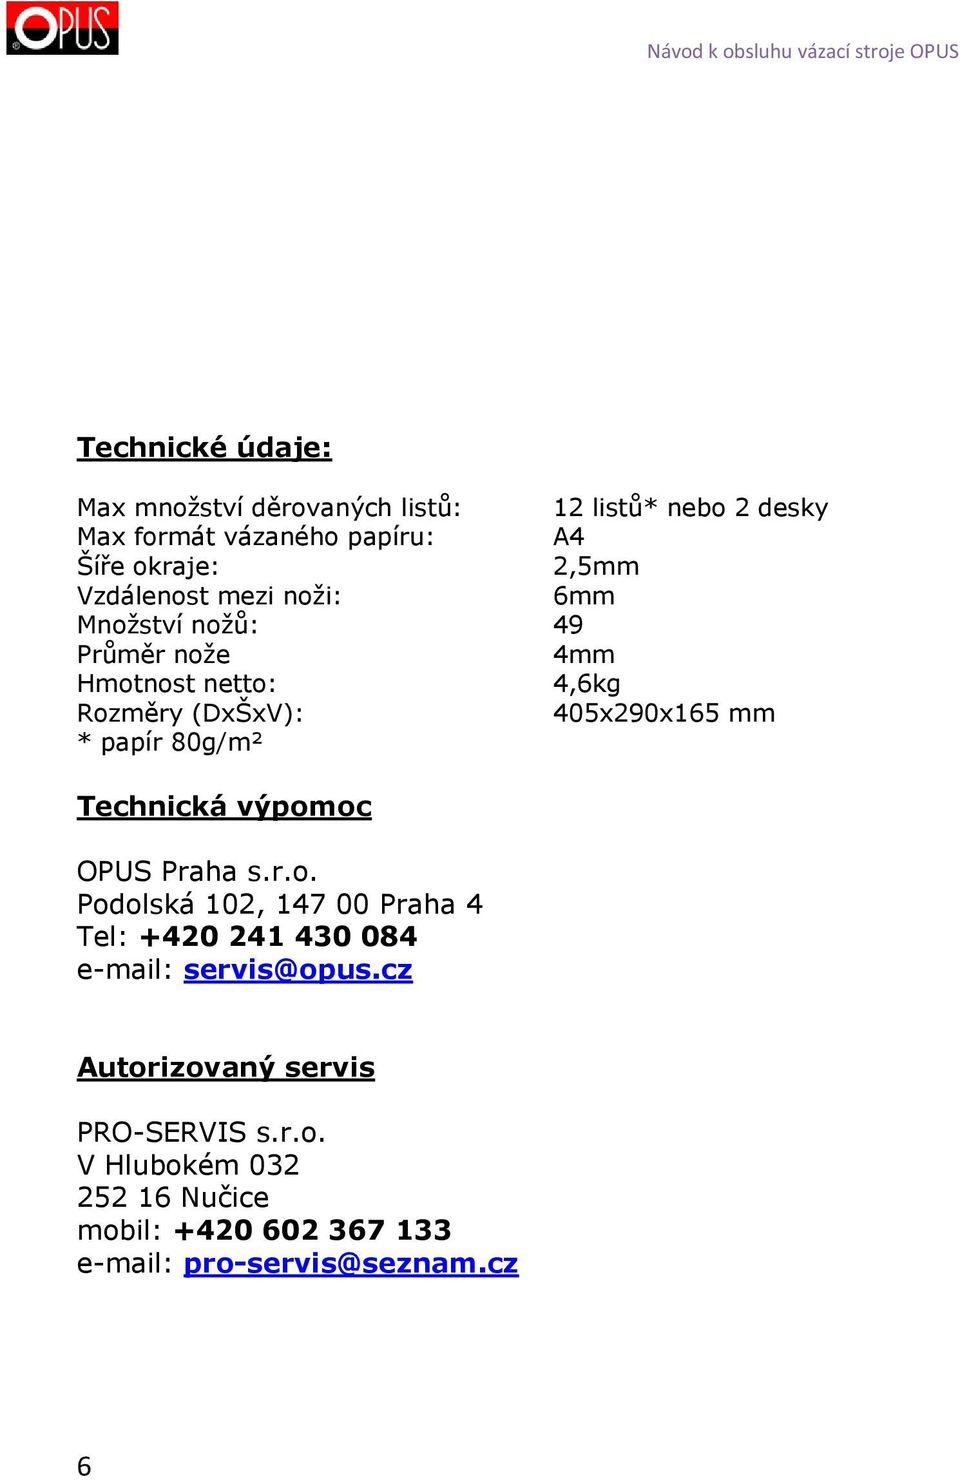 papír 80g/m² Technická výpomoc OPUS Praha s.r.o. Podolská 102, 147 00 Praha 4 Tel: +420 241 430 084 e-mail: servis@opus.